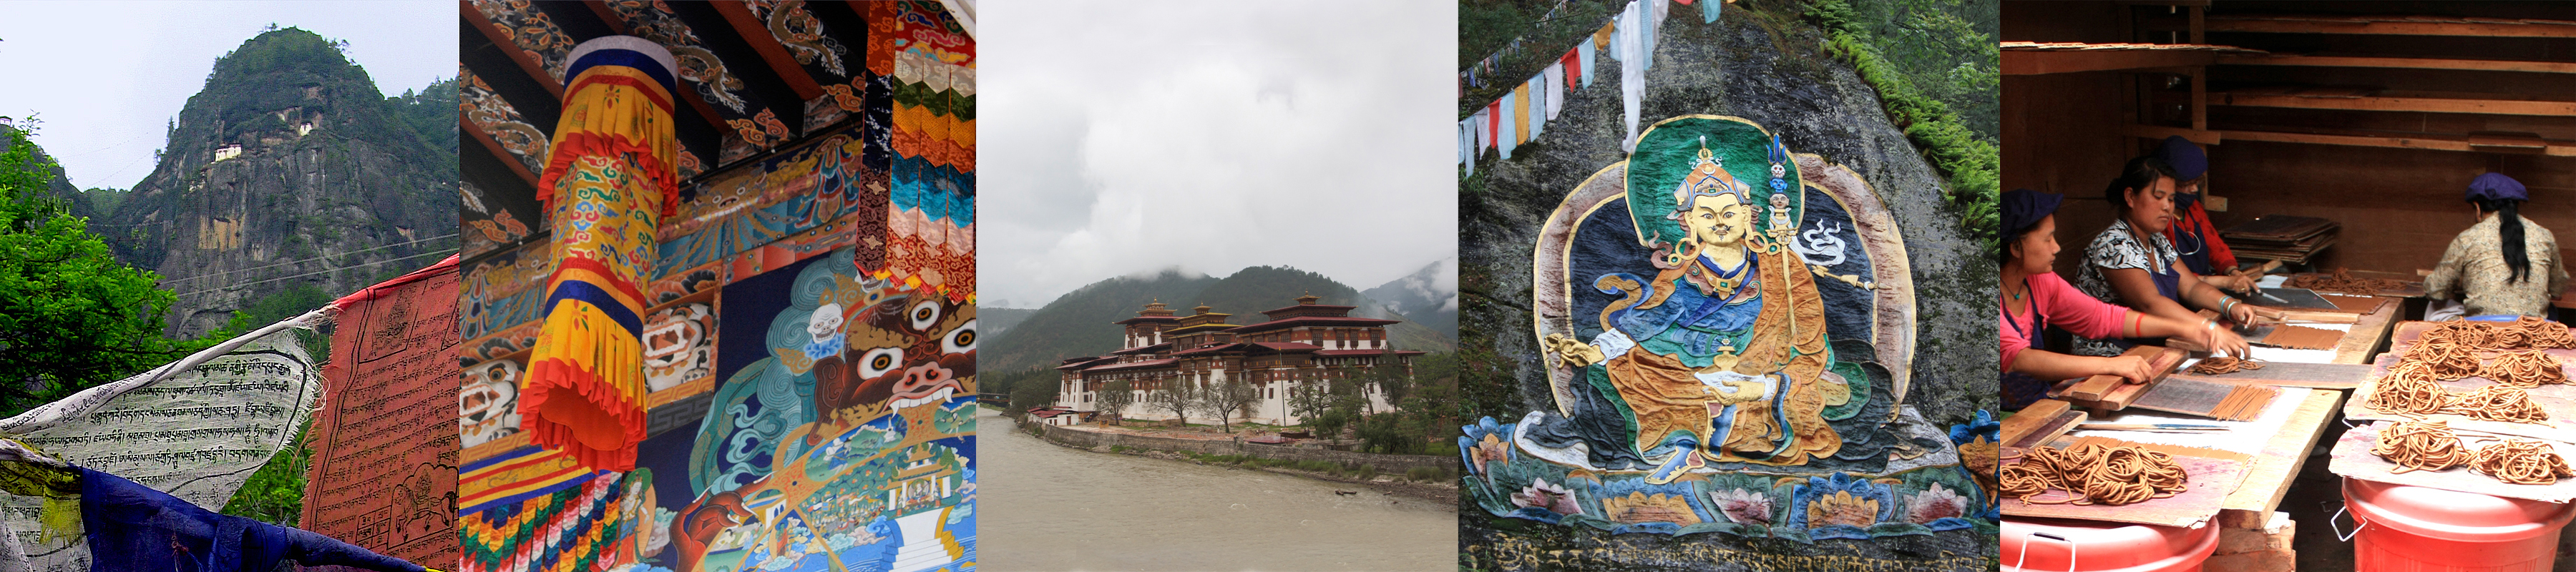 Images of Bhutan: Tiger's Nest Monastery; a Dzong interior; Punakha Dzong; Guru Rimpoche; hand-crafting fine incense